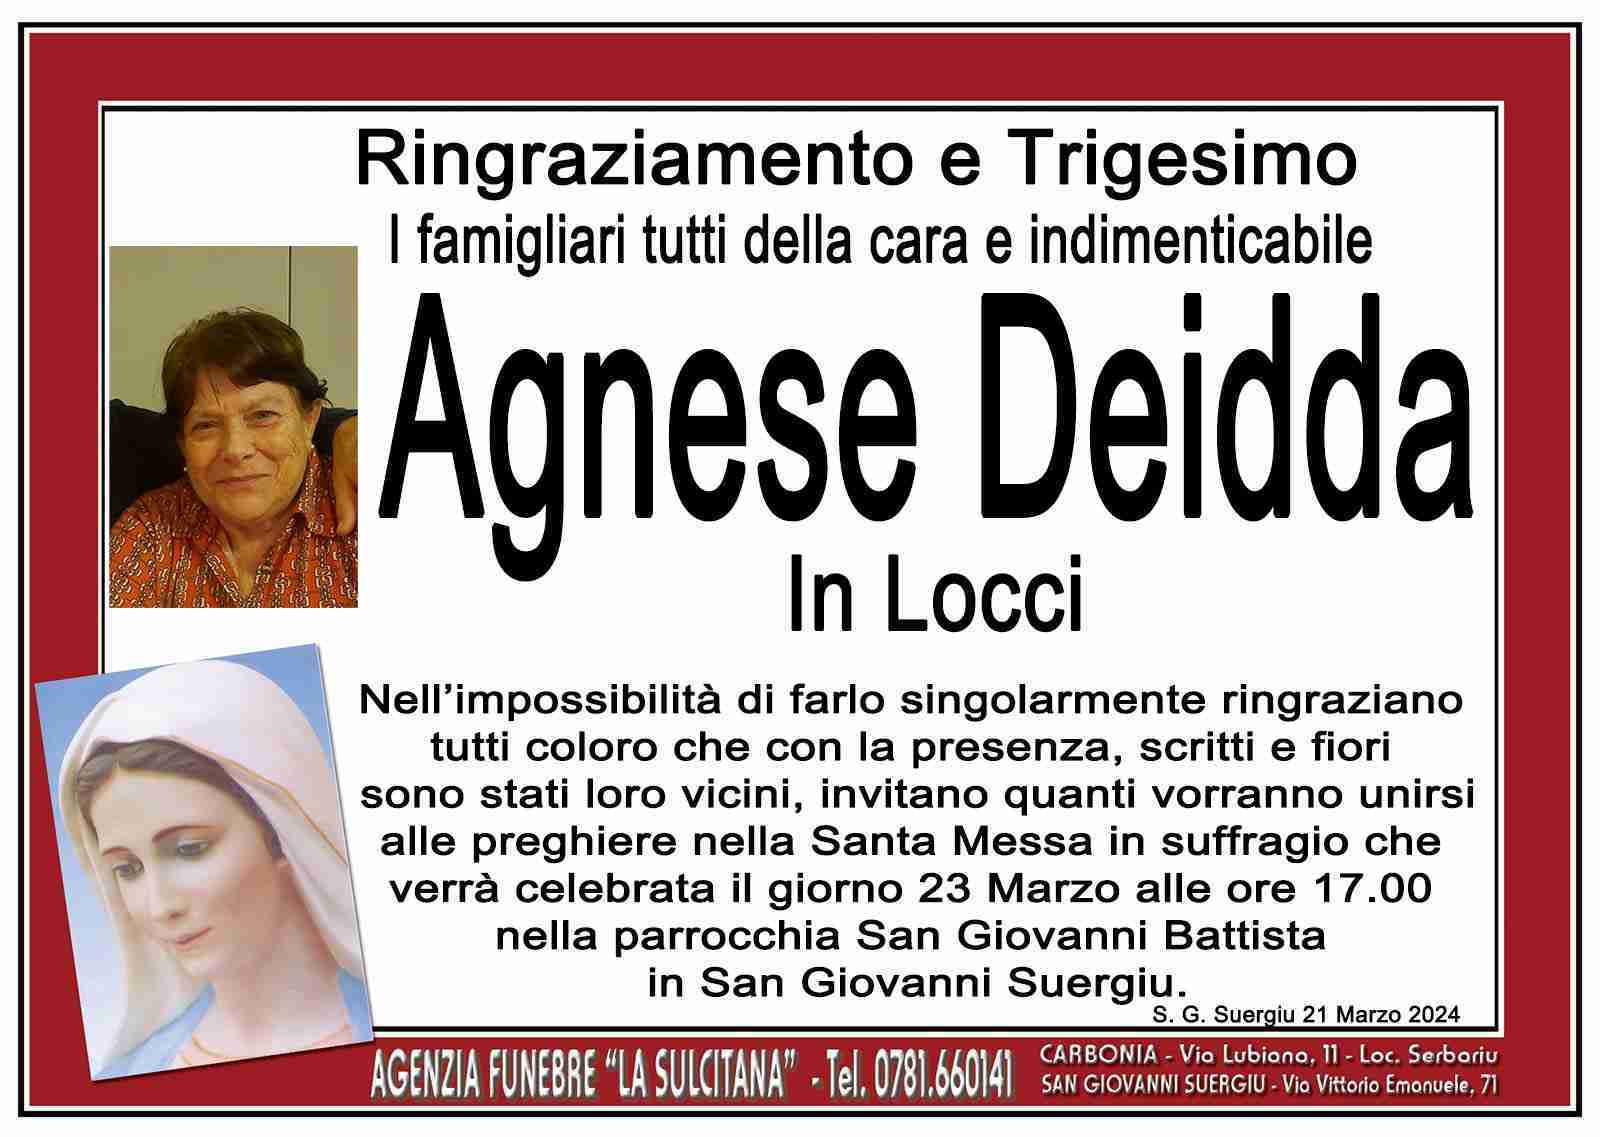 Agnese Deidda